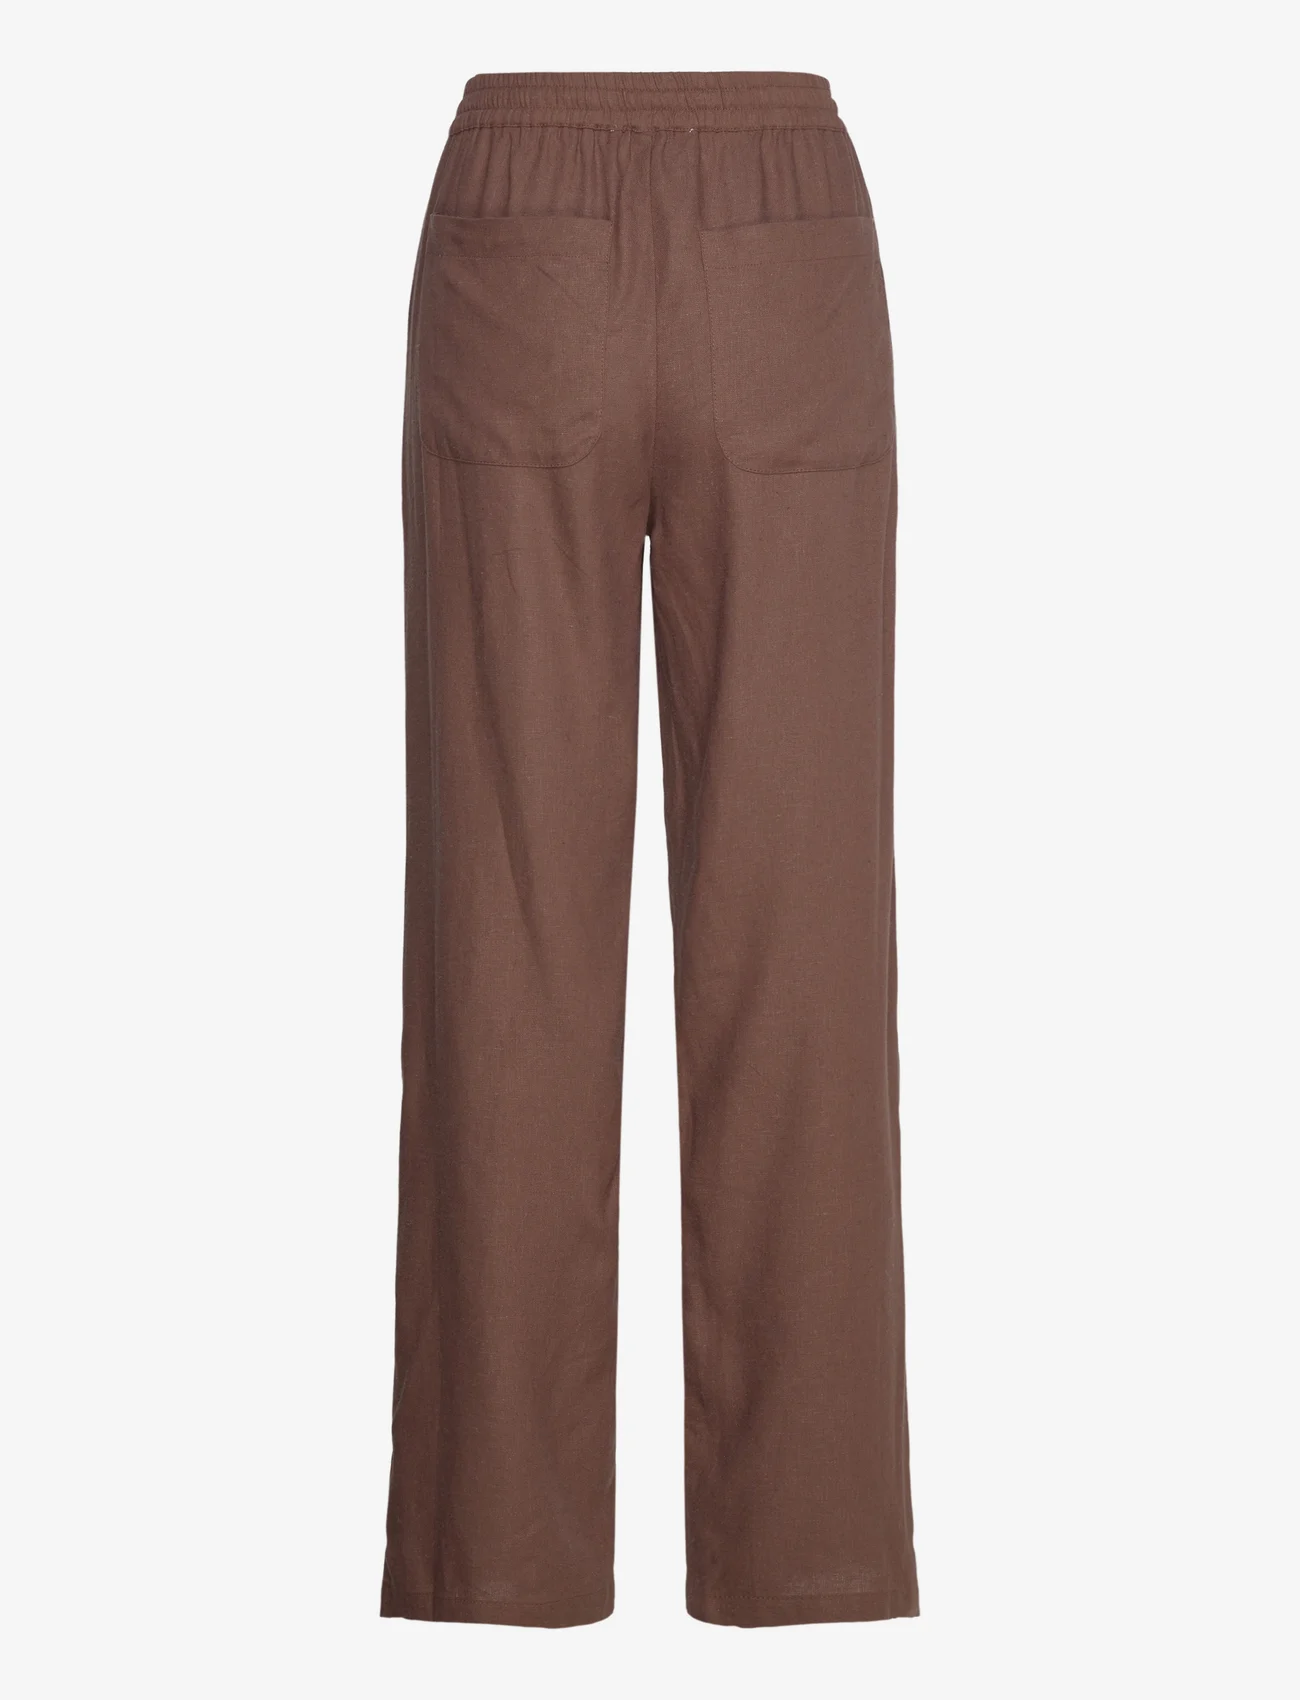 Sofie Schnoor - Trousers - spodnie lniane - chocolate brown - 1